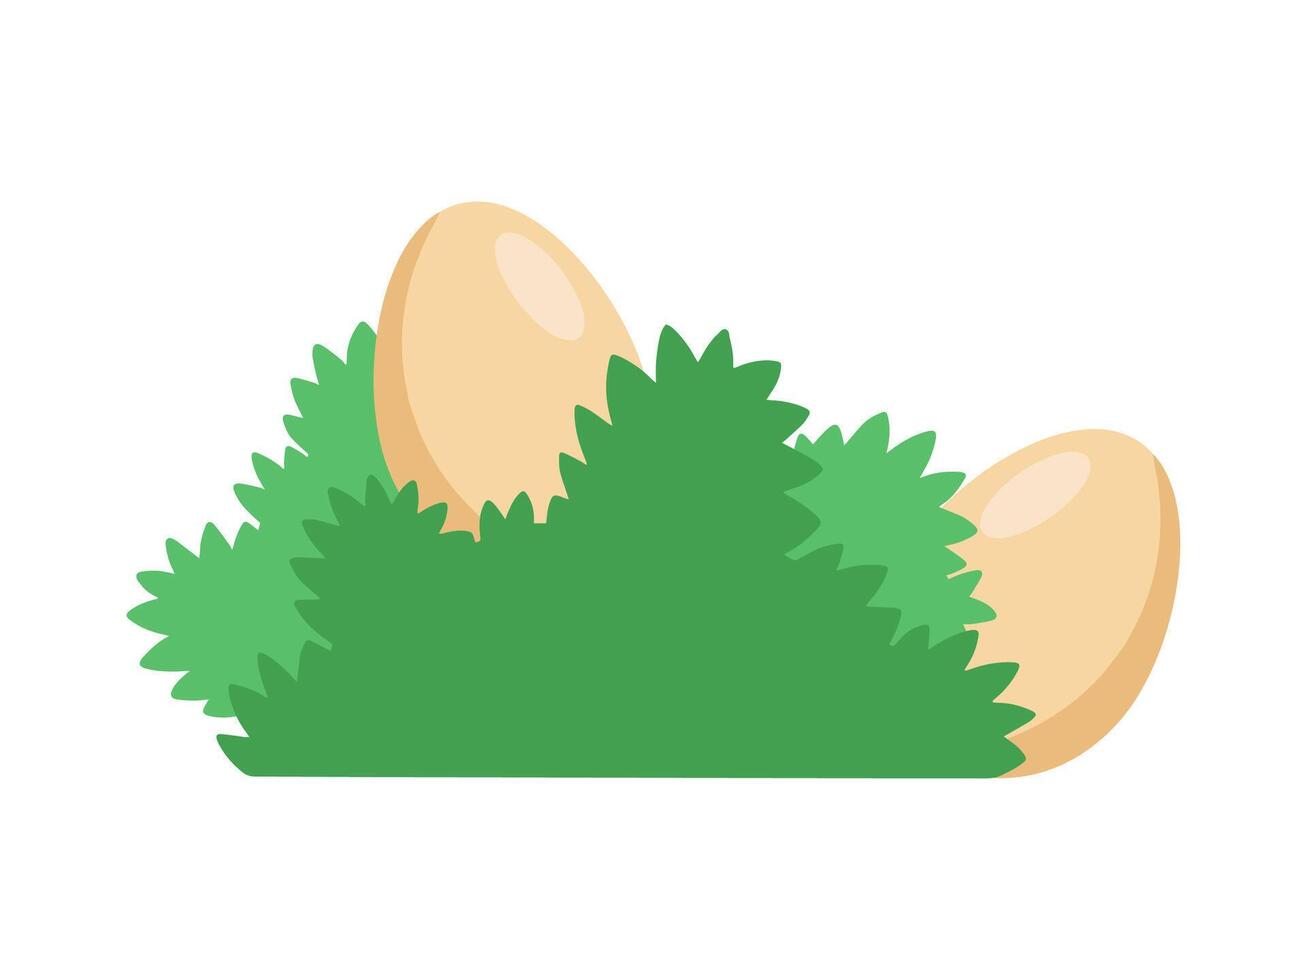 Pâques Oeuf dans vert herbe illustration vecteur